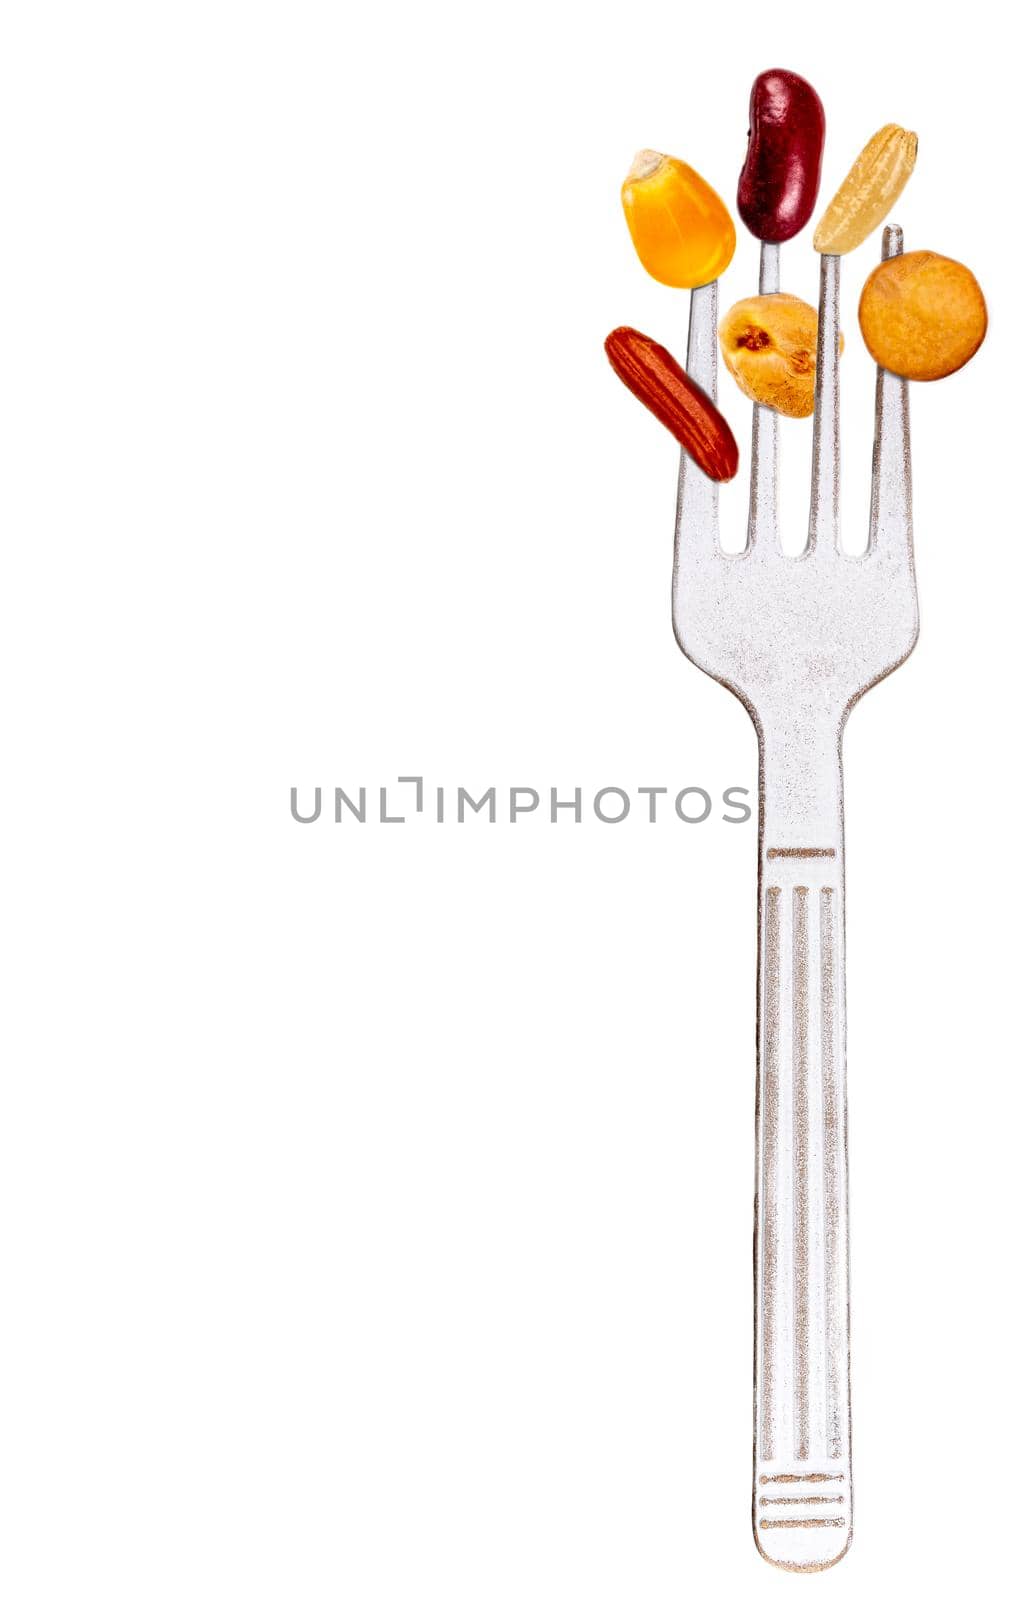 Fork containing, rice,corn beans lentil chickpeas conceptual photos